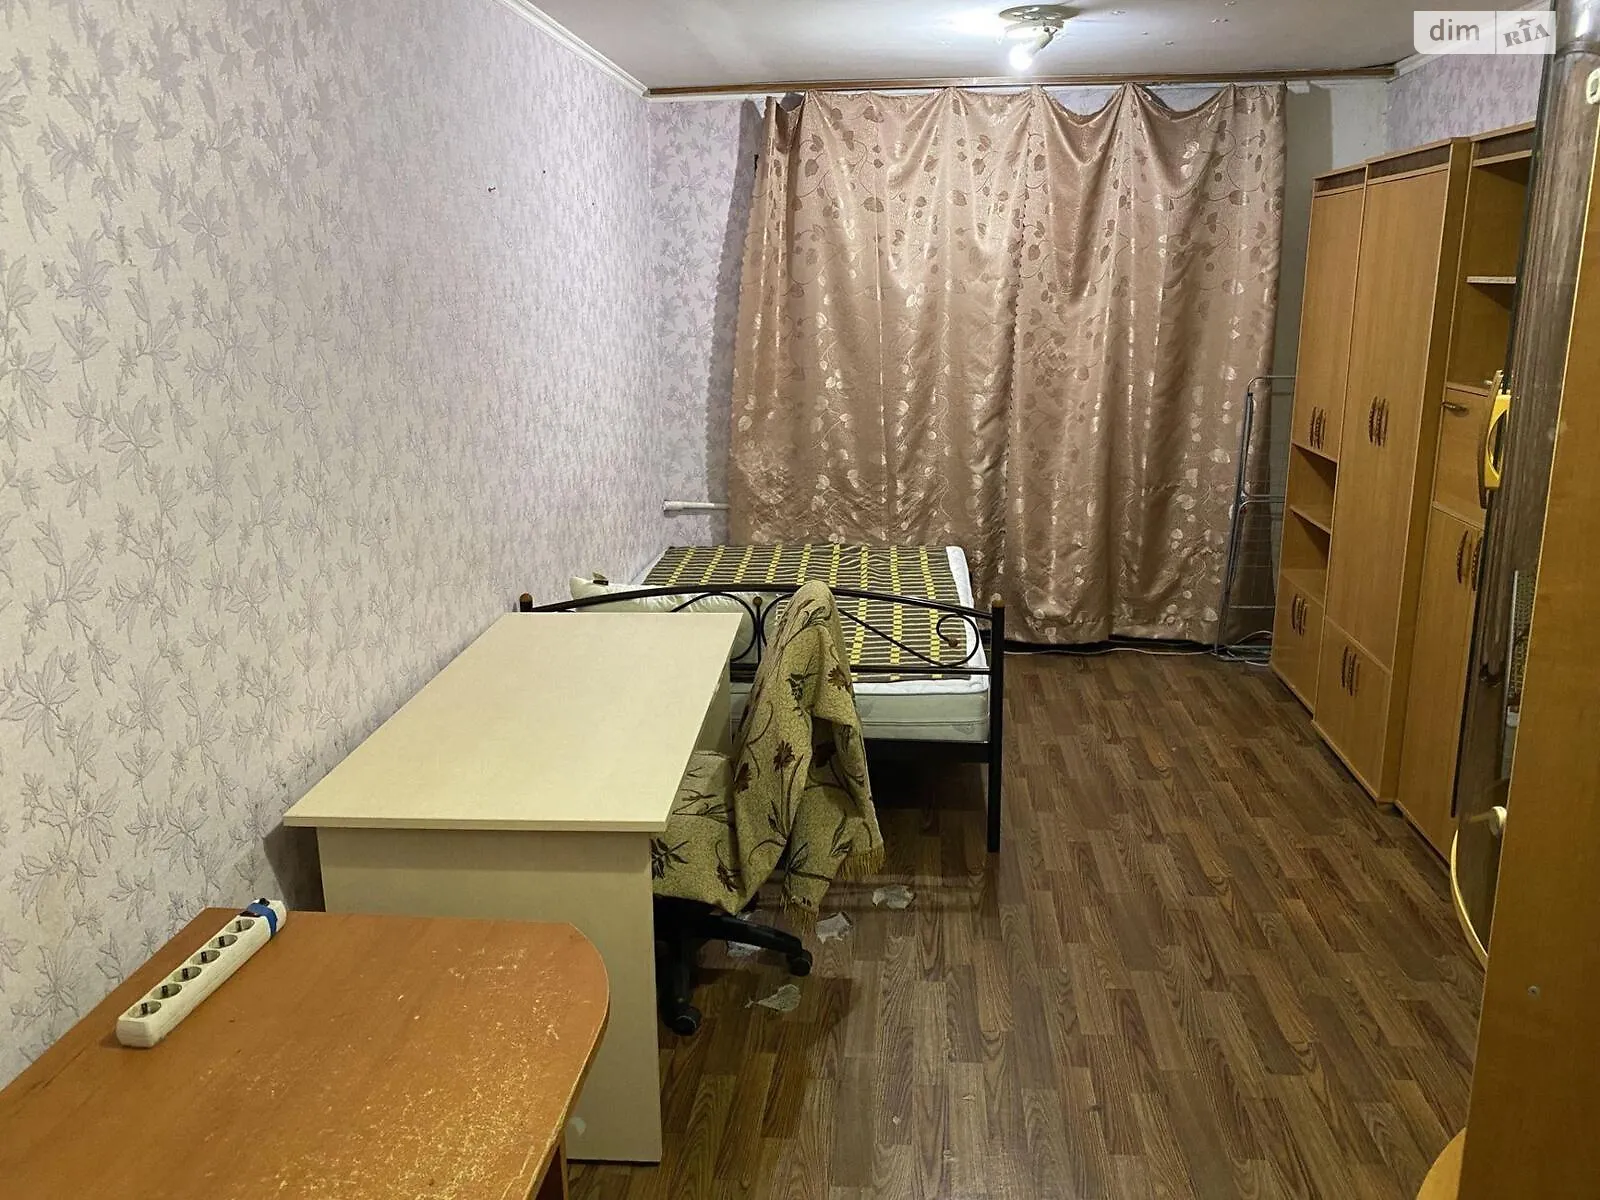 Продается комната 20 кв. м в Киеве, цена: 16500 $ - фото 1